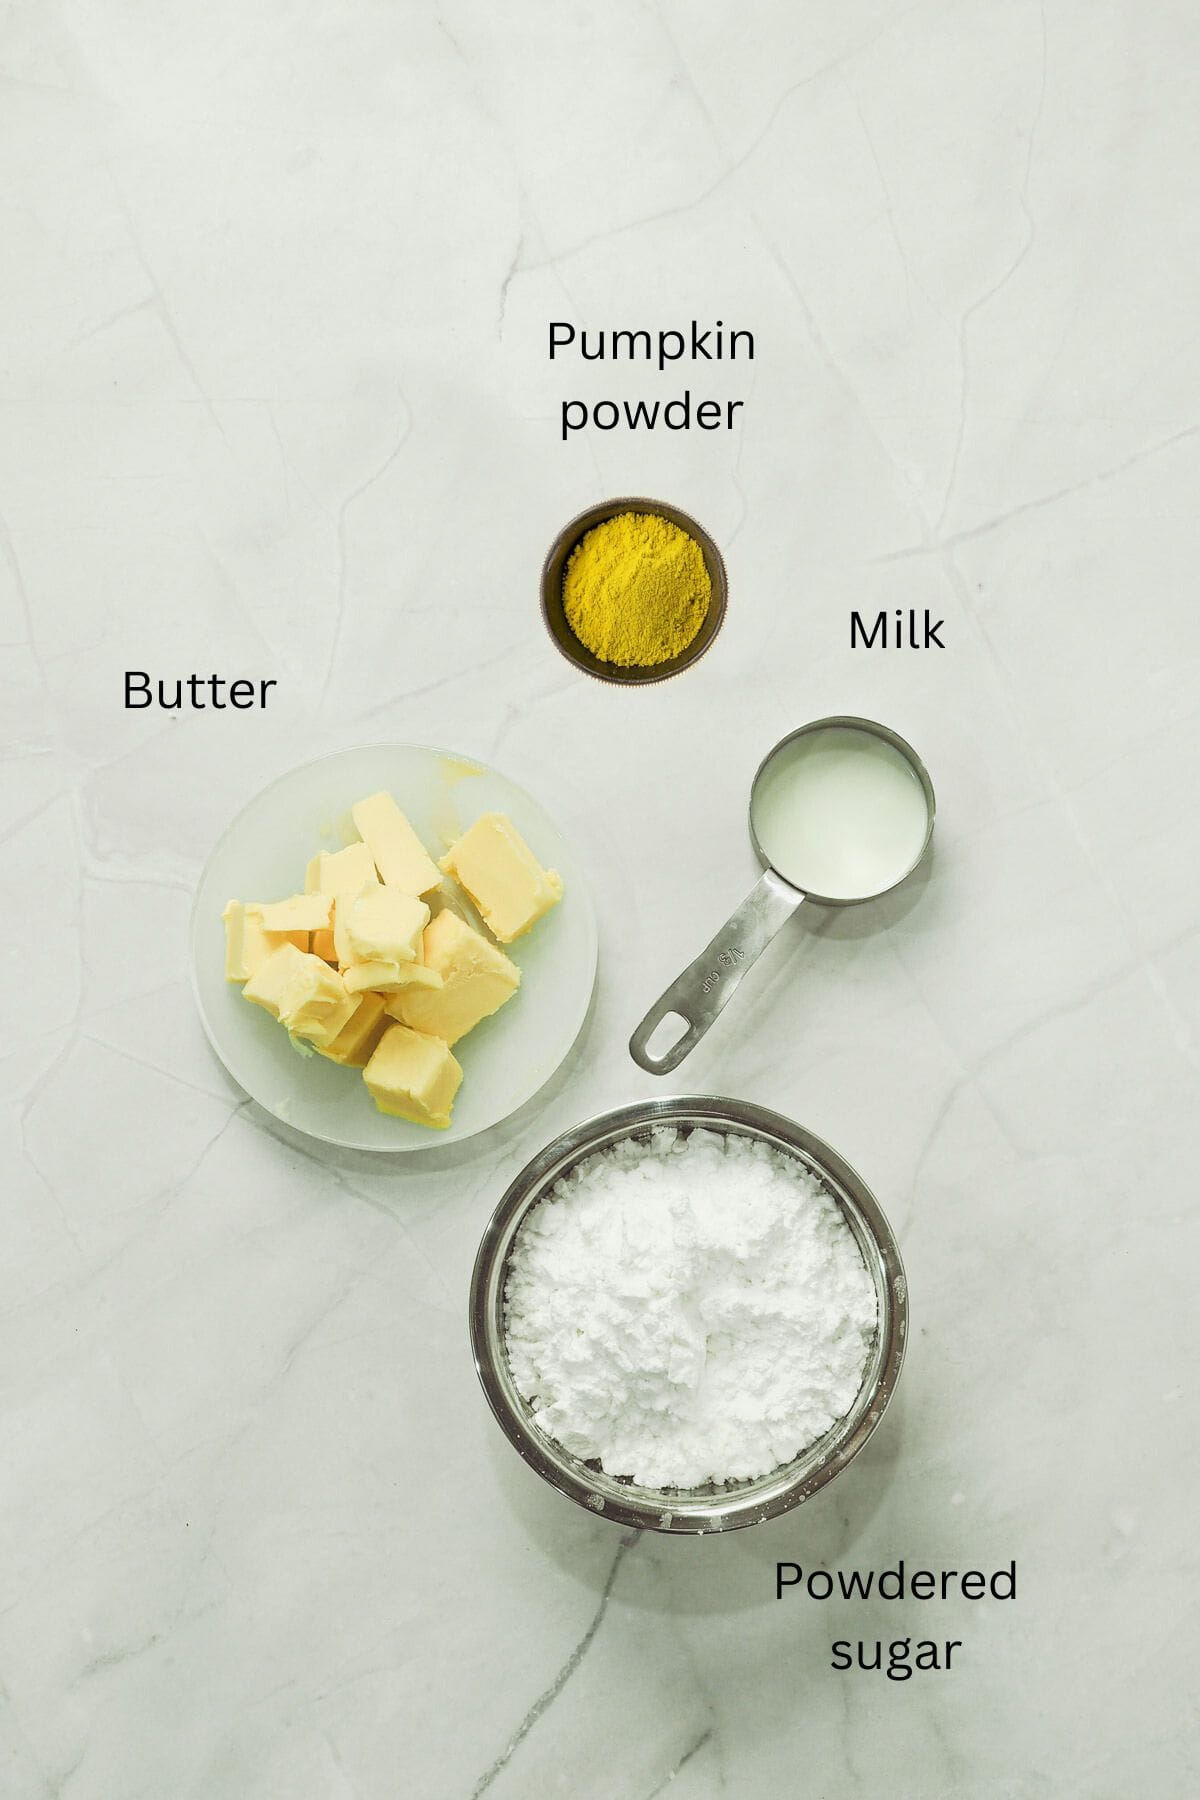 Powdered sugar, butter, milk and pumpkin powder against a marble background.